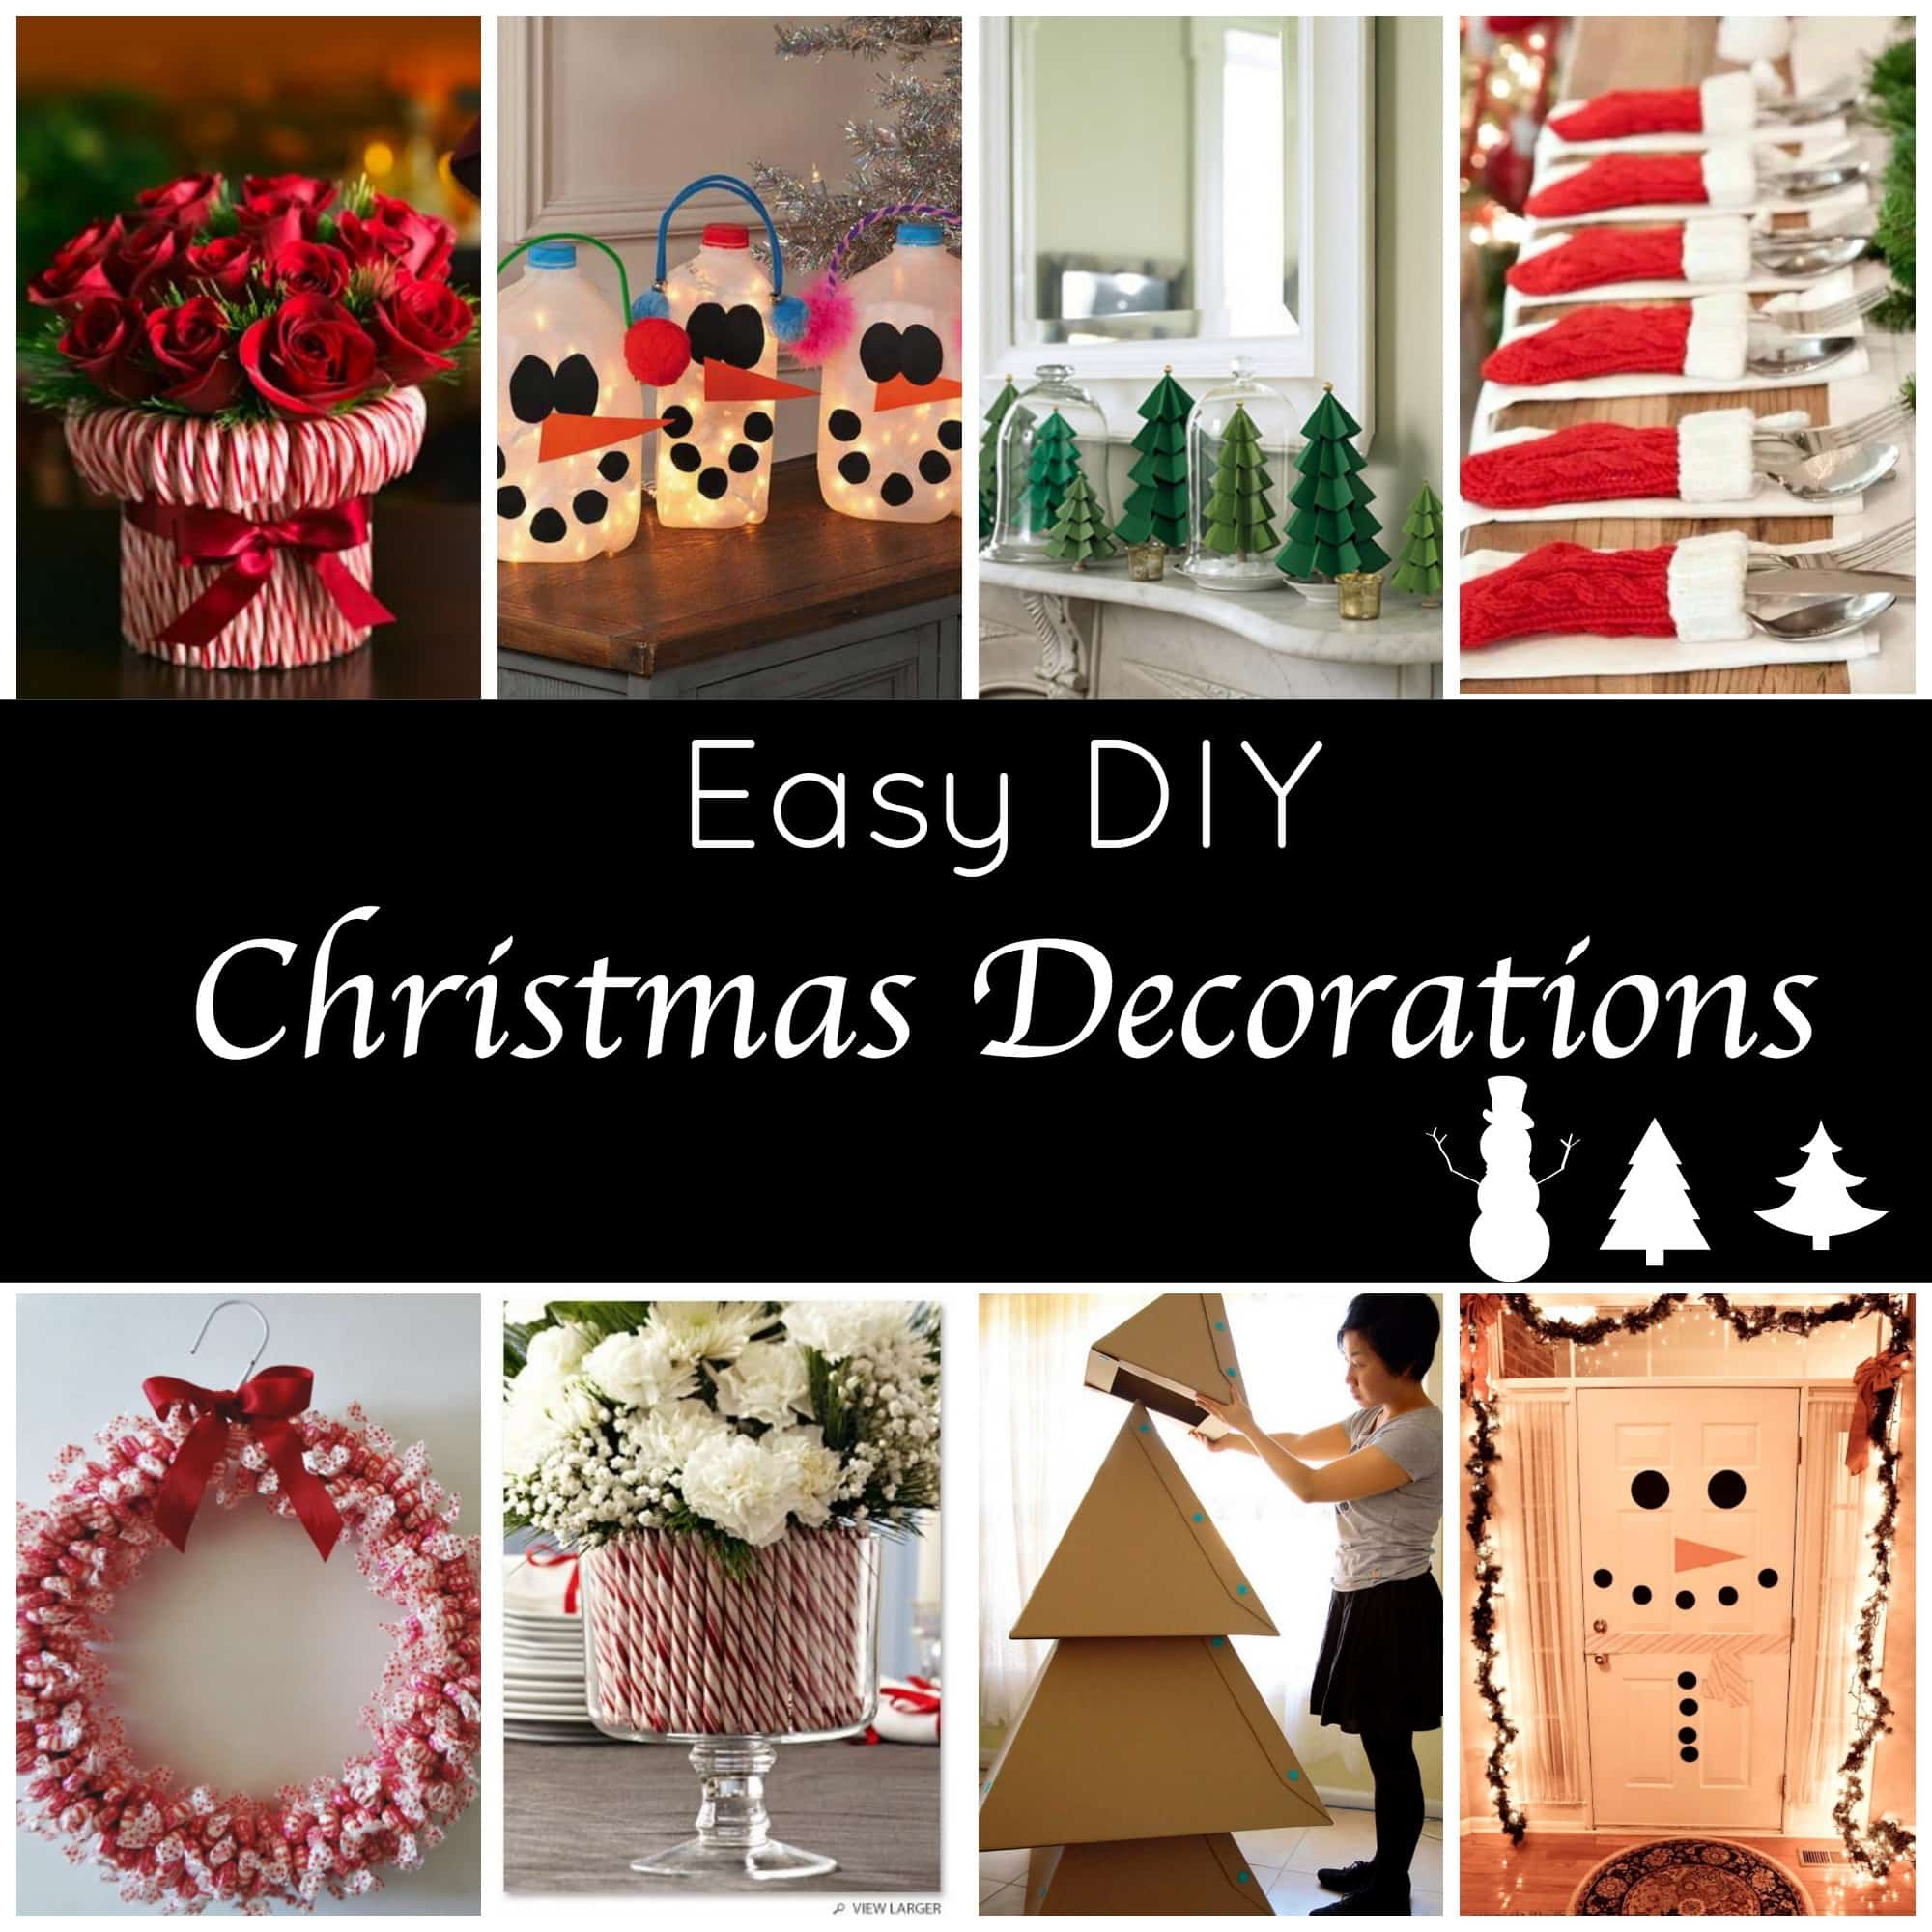 Easy DIY Christmas Ornaments
 Cute & Easy Holiday Decorations Princess Pinky Girl